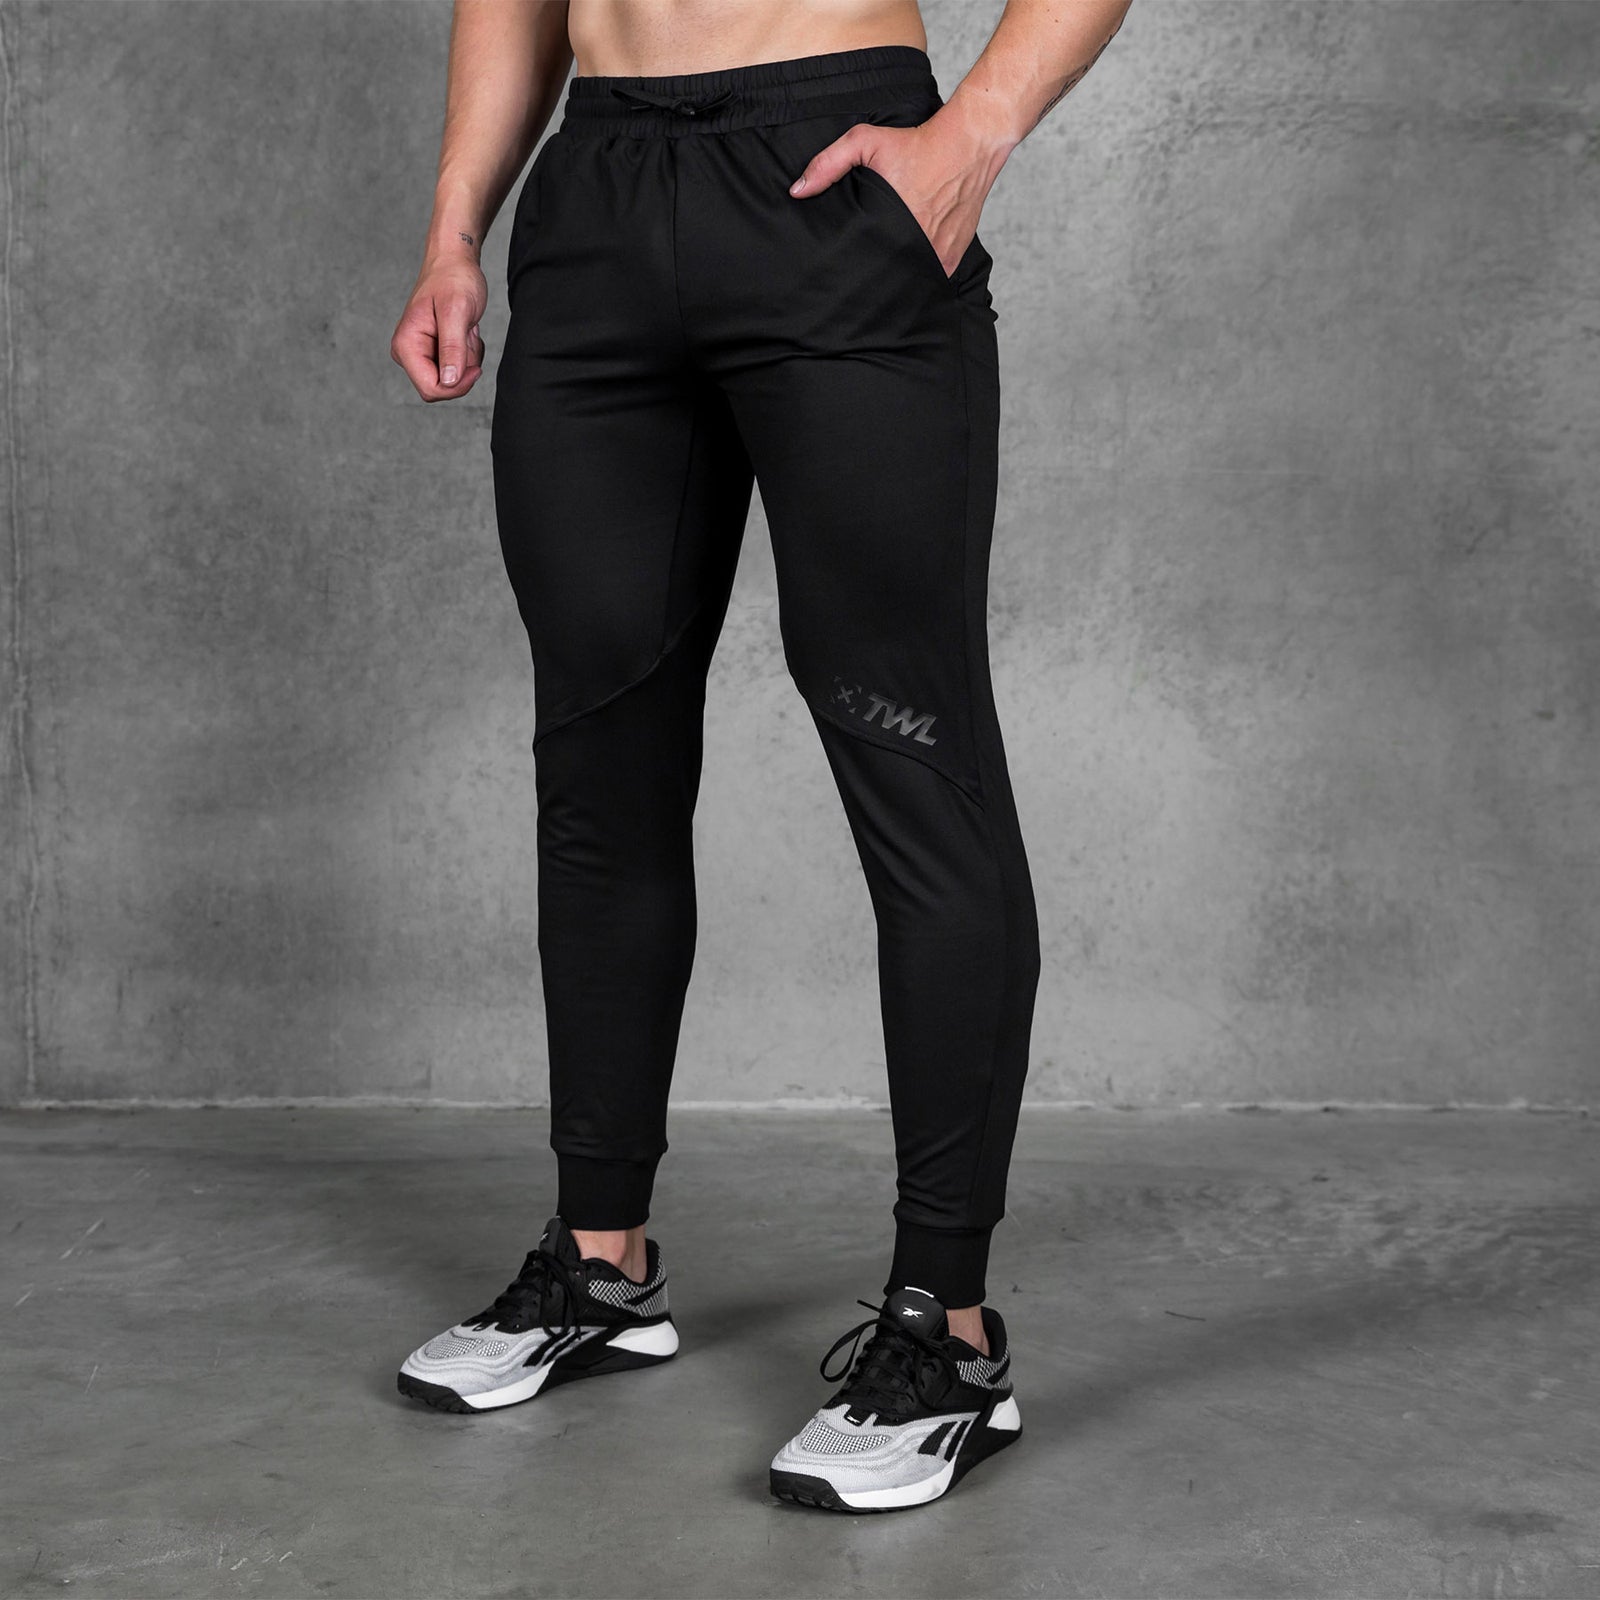 Men’s Warm Fitness Pants - 100 Black